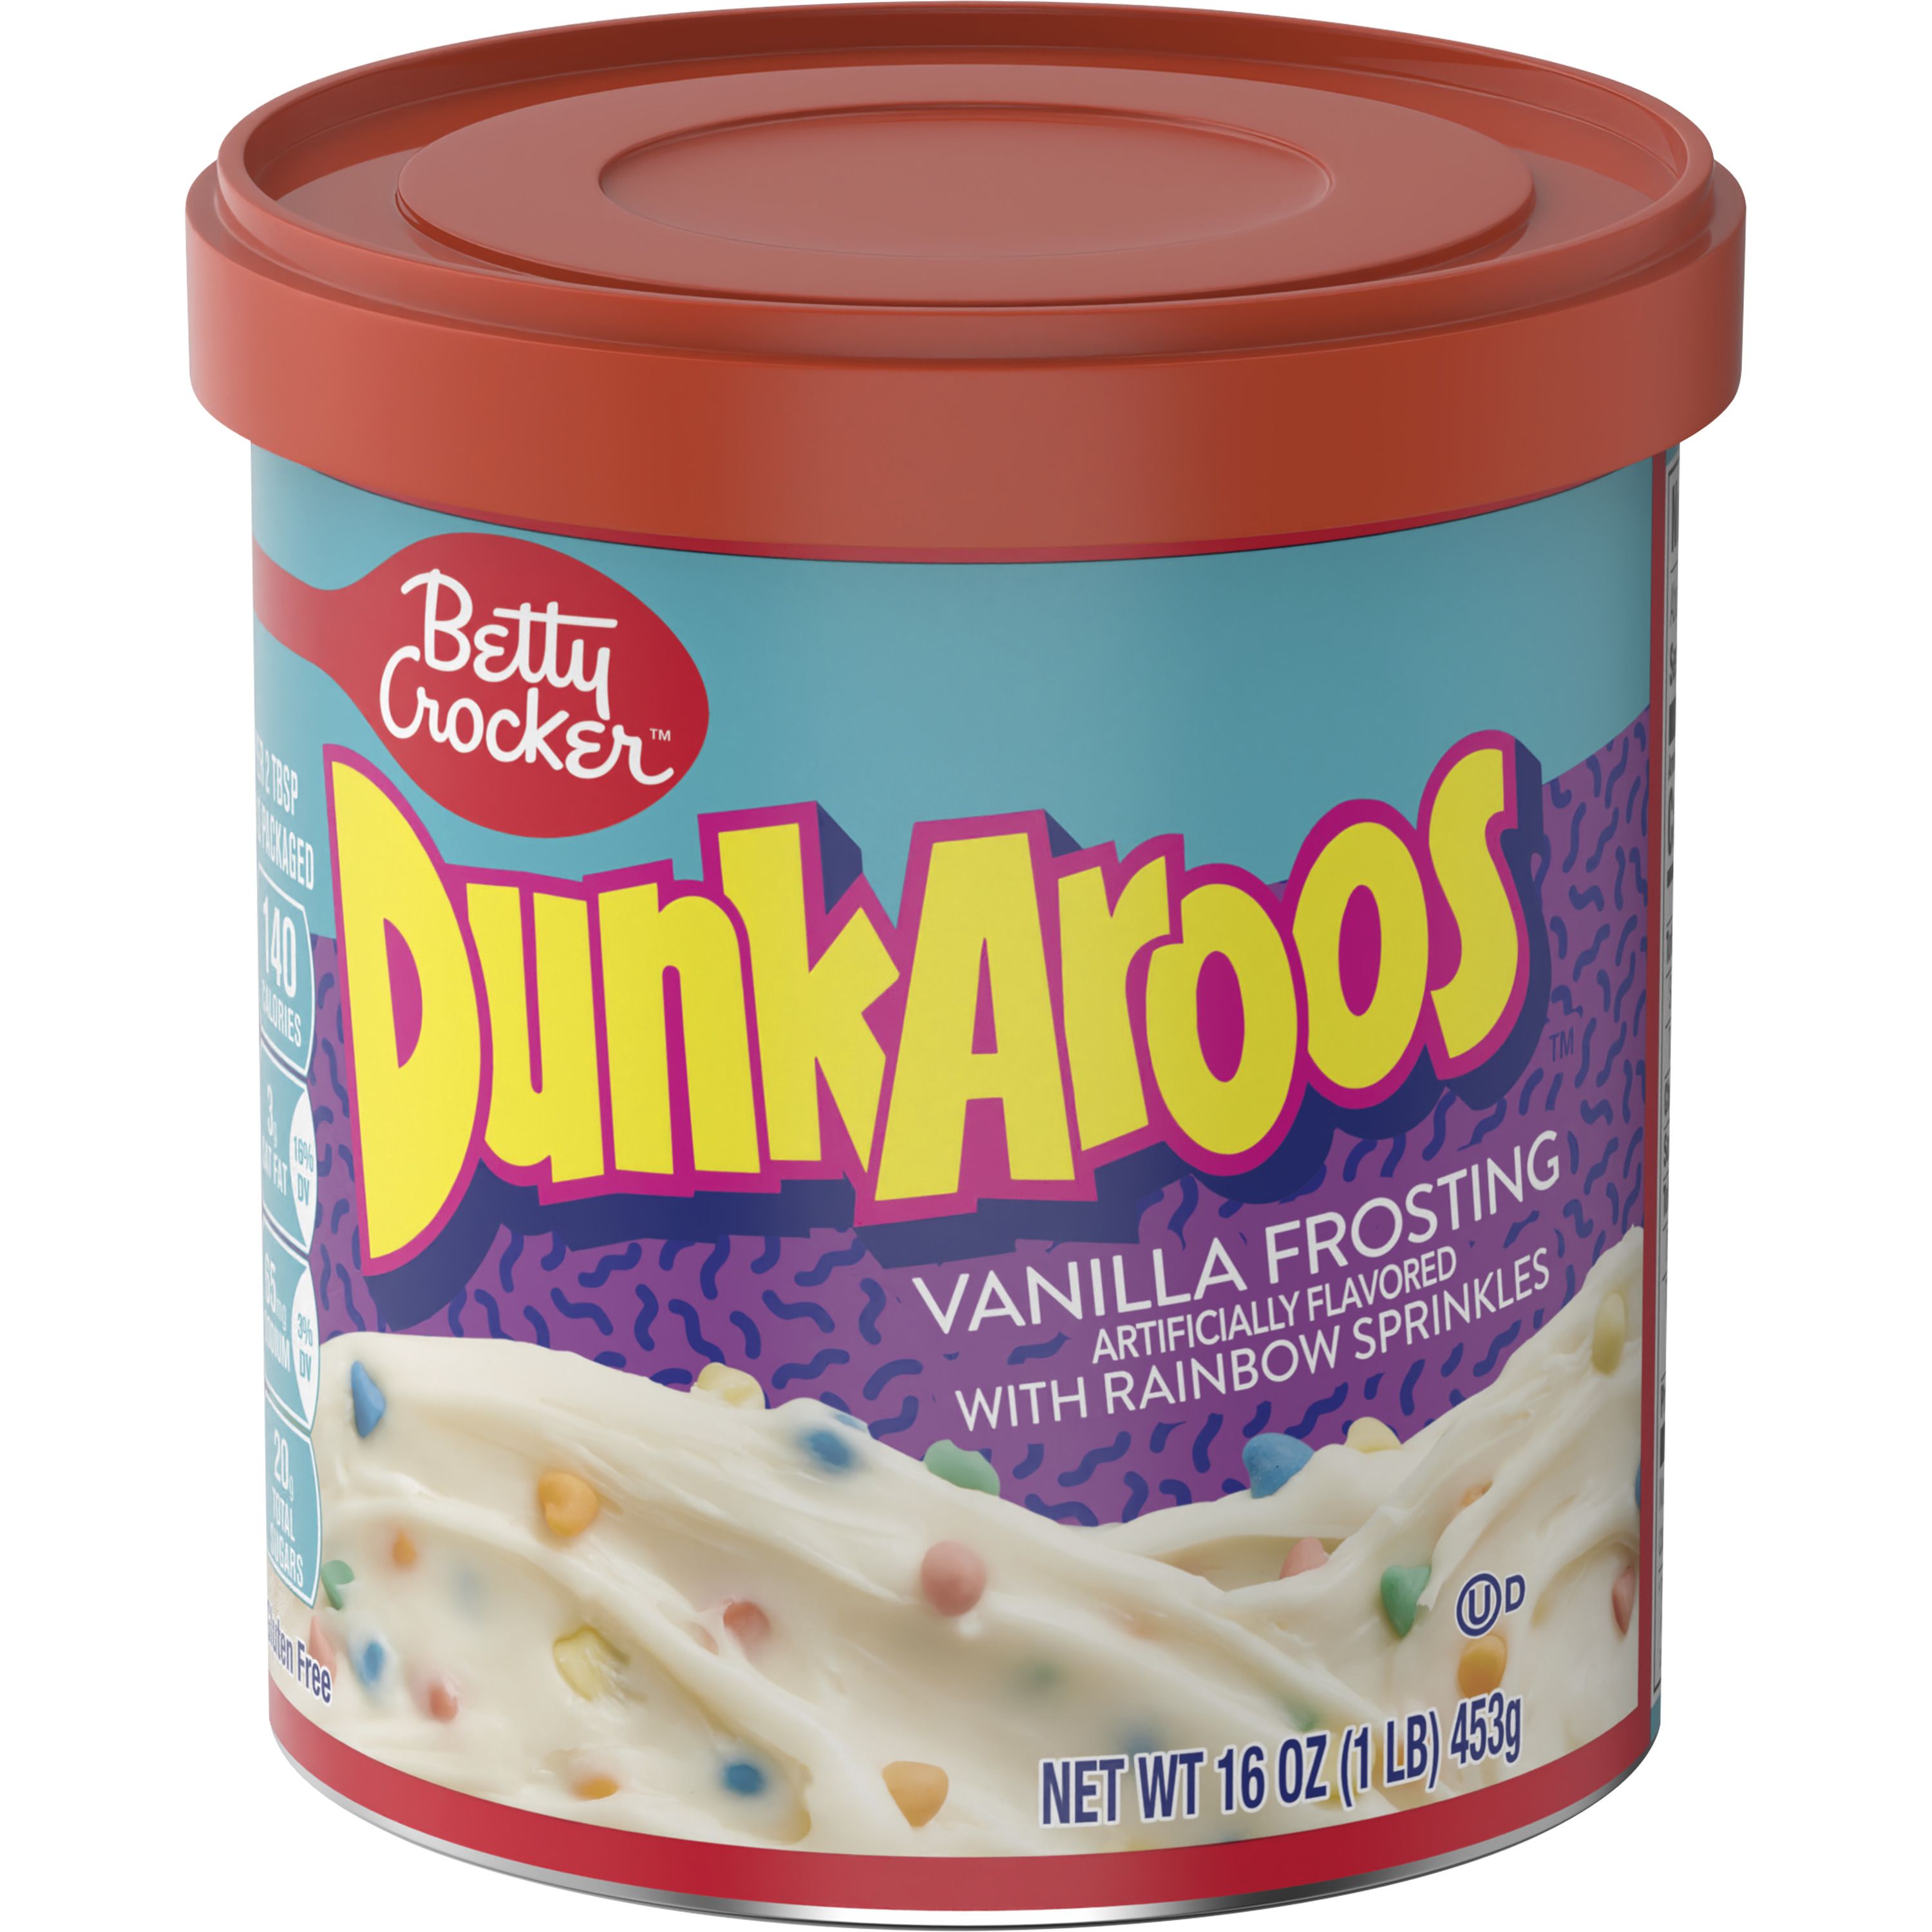 Betty Crocker Dunkaroos Vanilla Frosting with Rainbow Sprinkles, 16 oz - Front